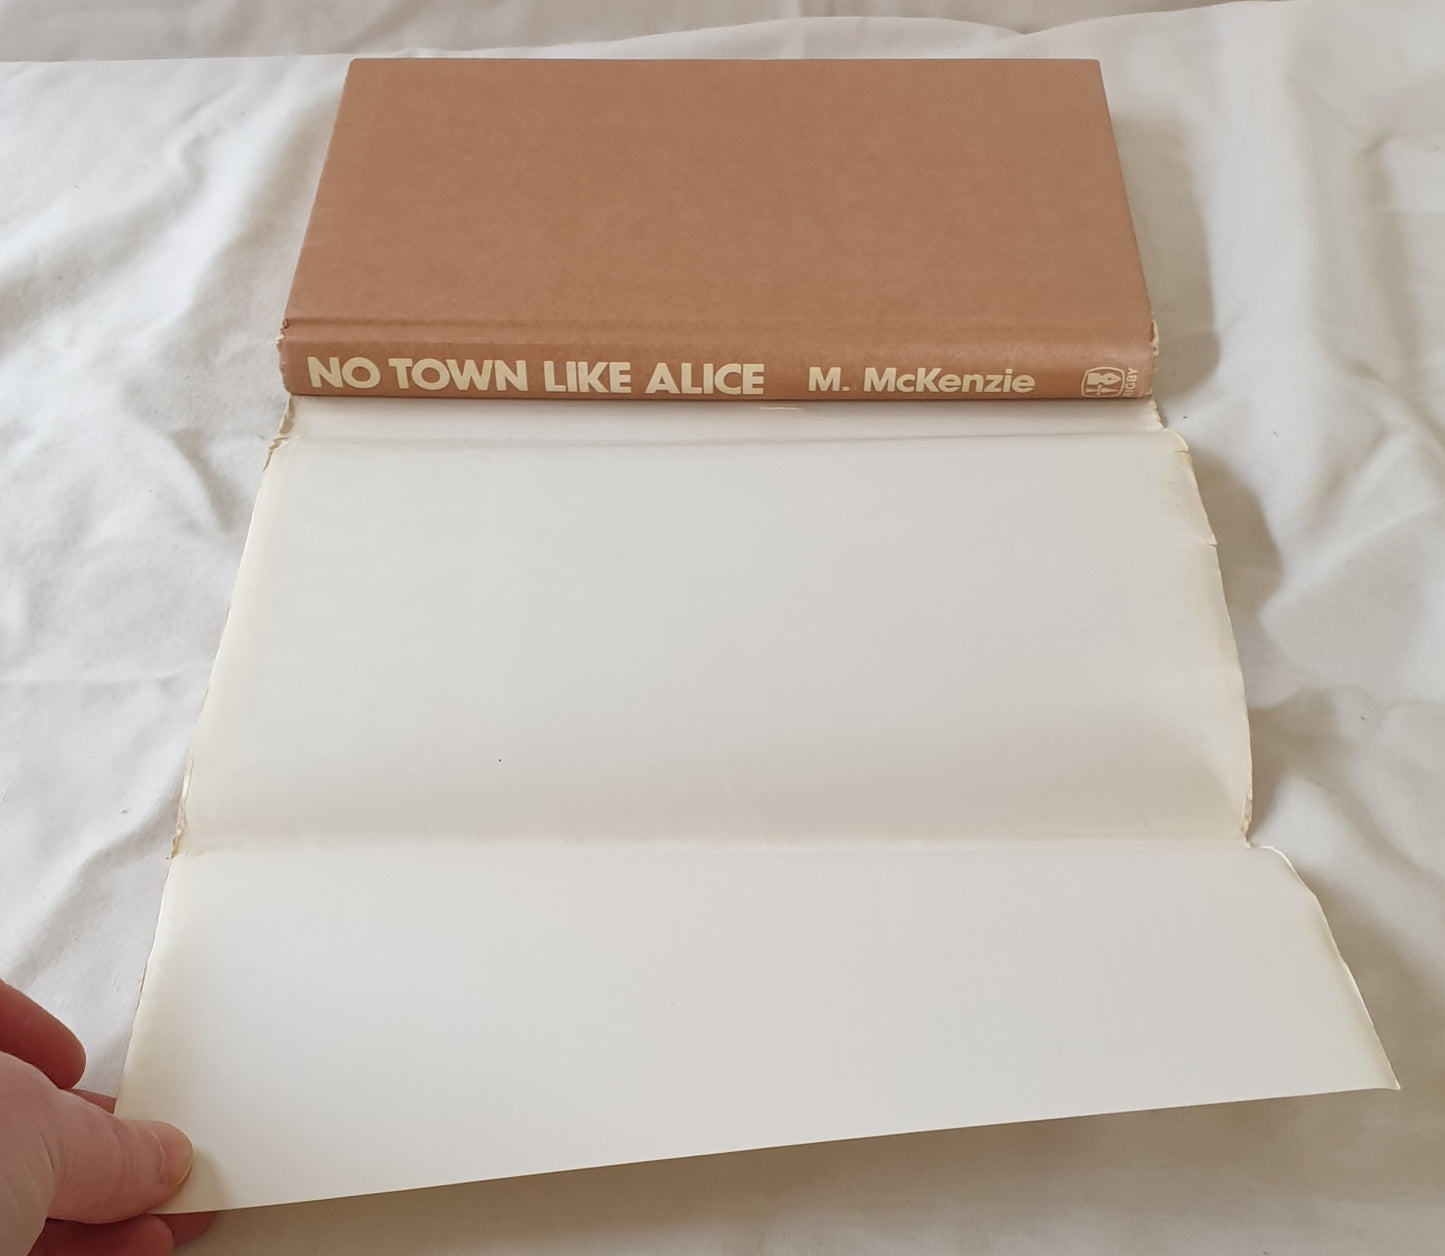 No Town Like Alice by Maisie McKenzie